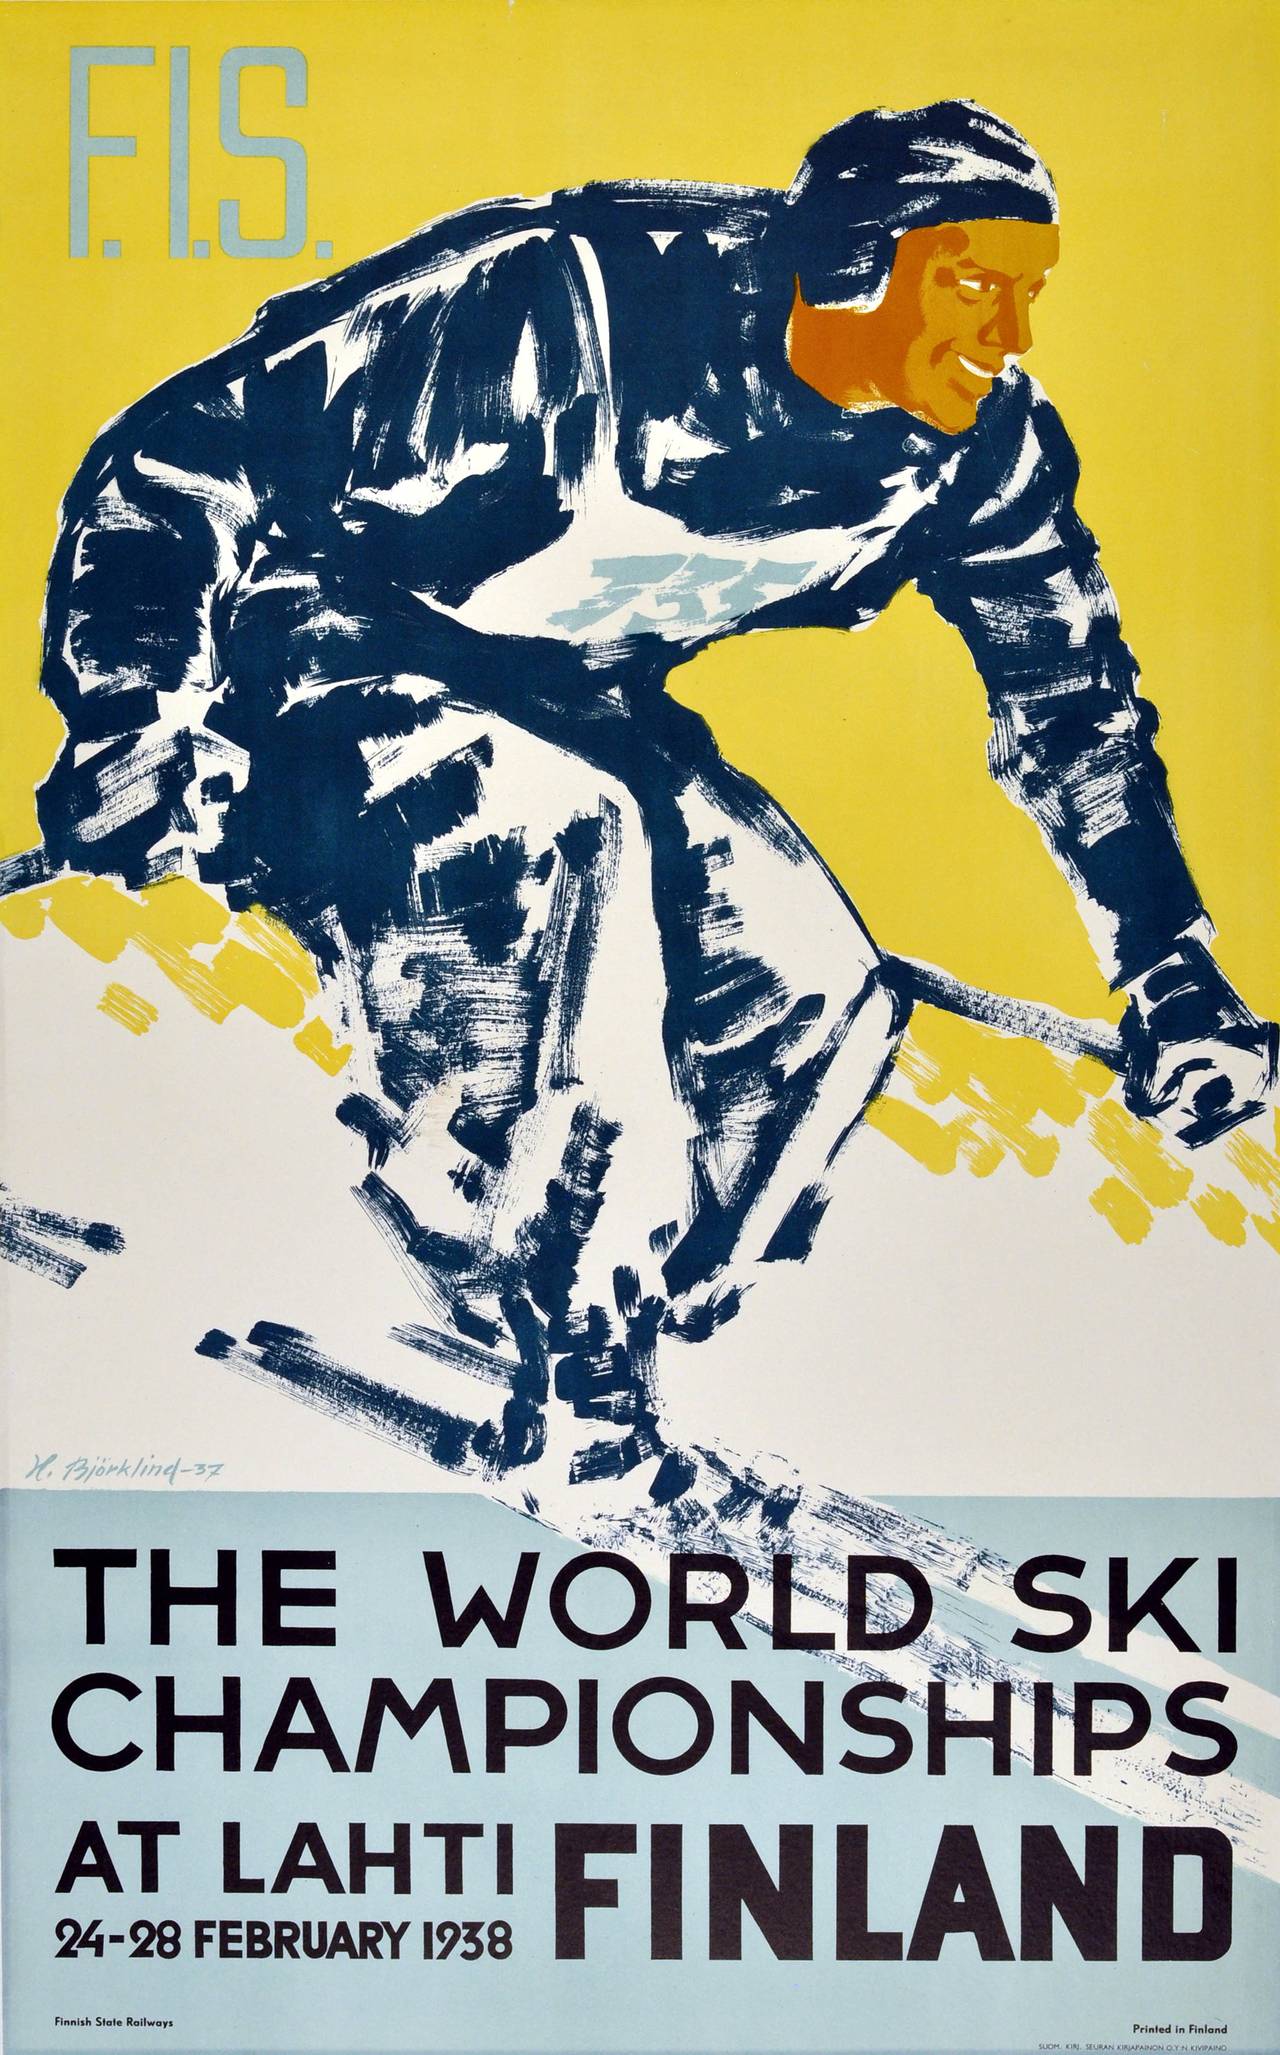 Unknown Print - Original Vintage Poster For The 1938 World Ski Championships At Lahti, Finland